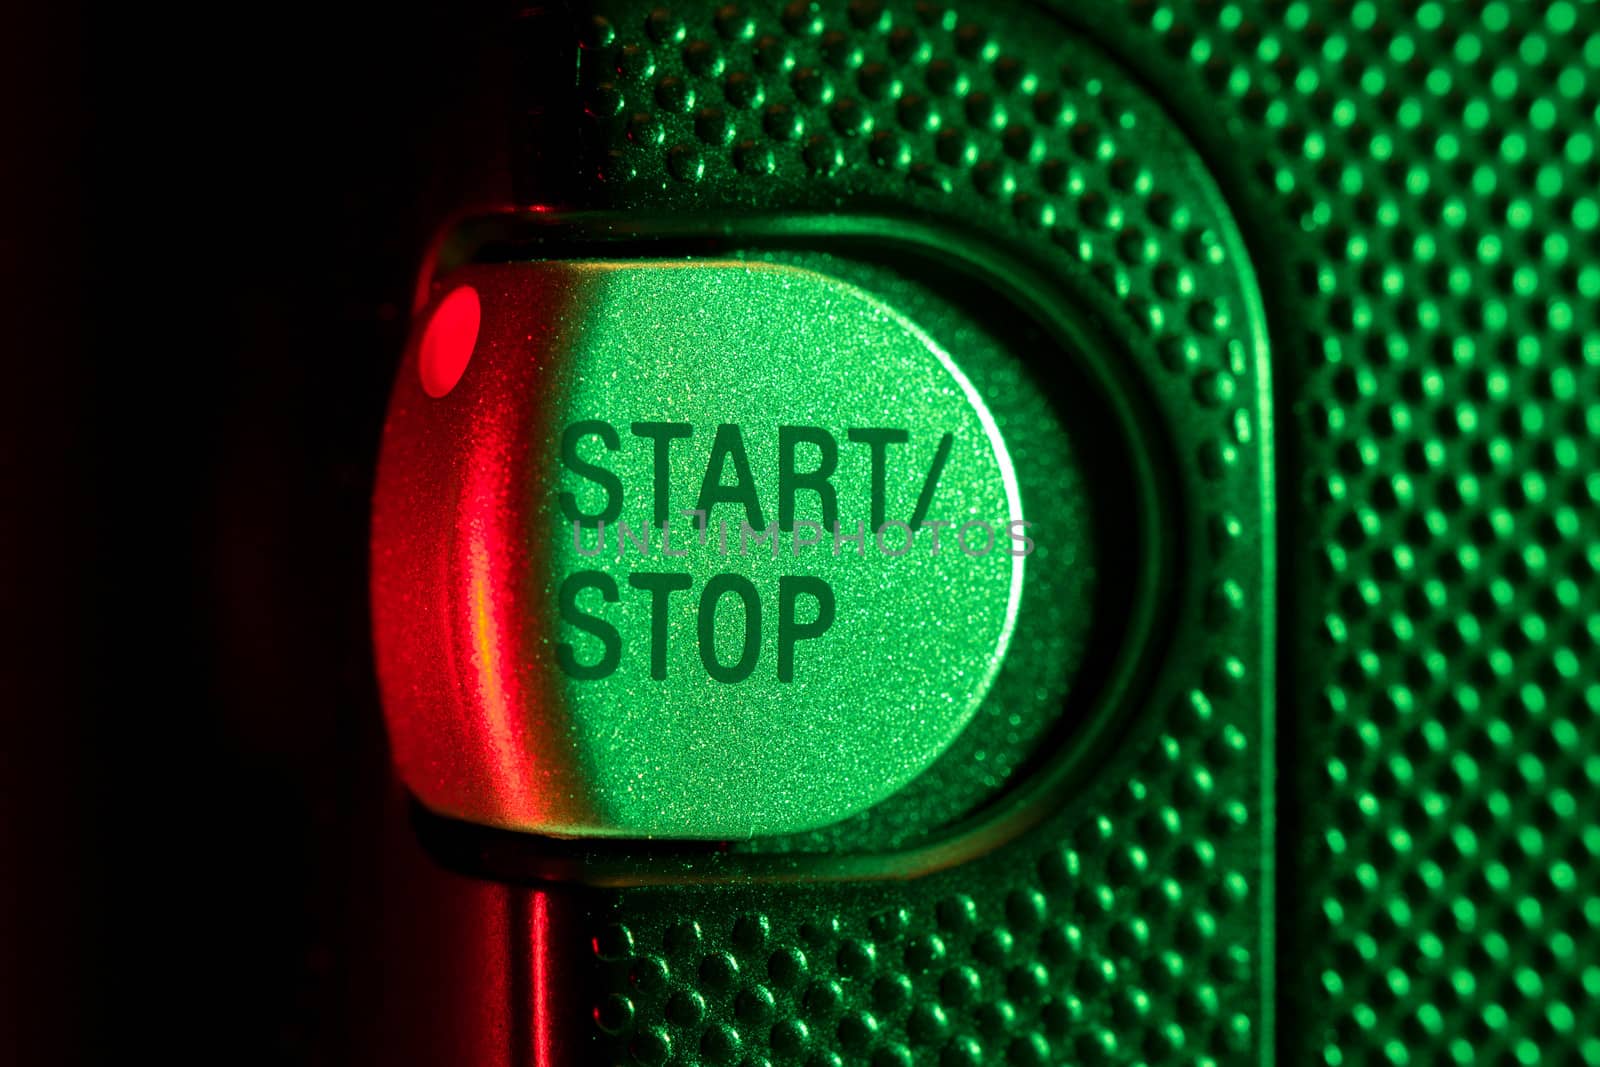 Start Stop recording button closeup